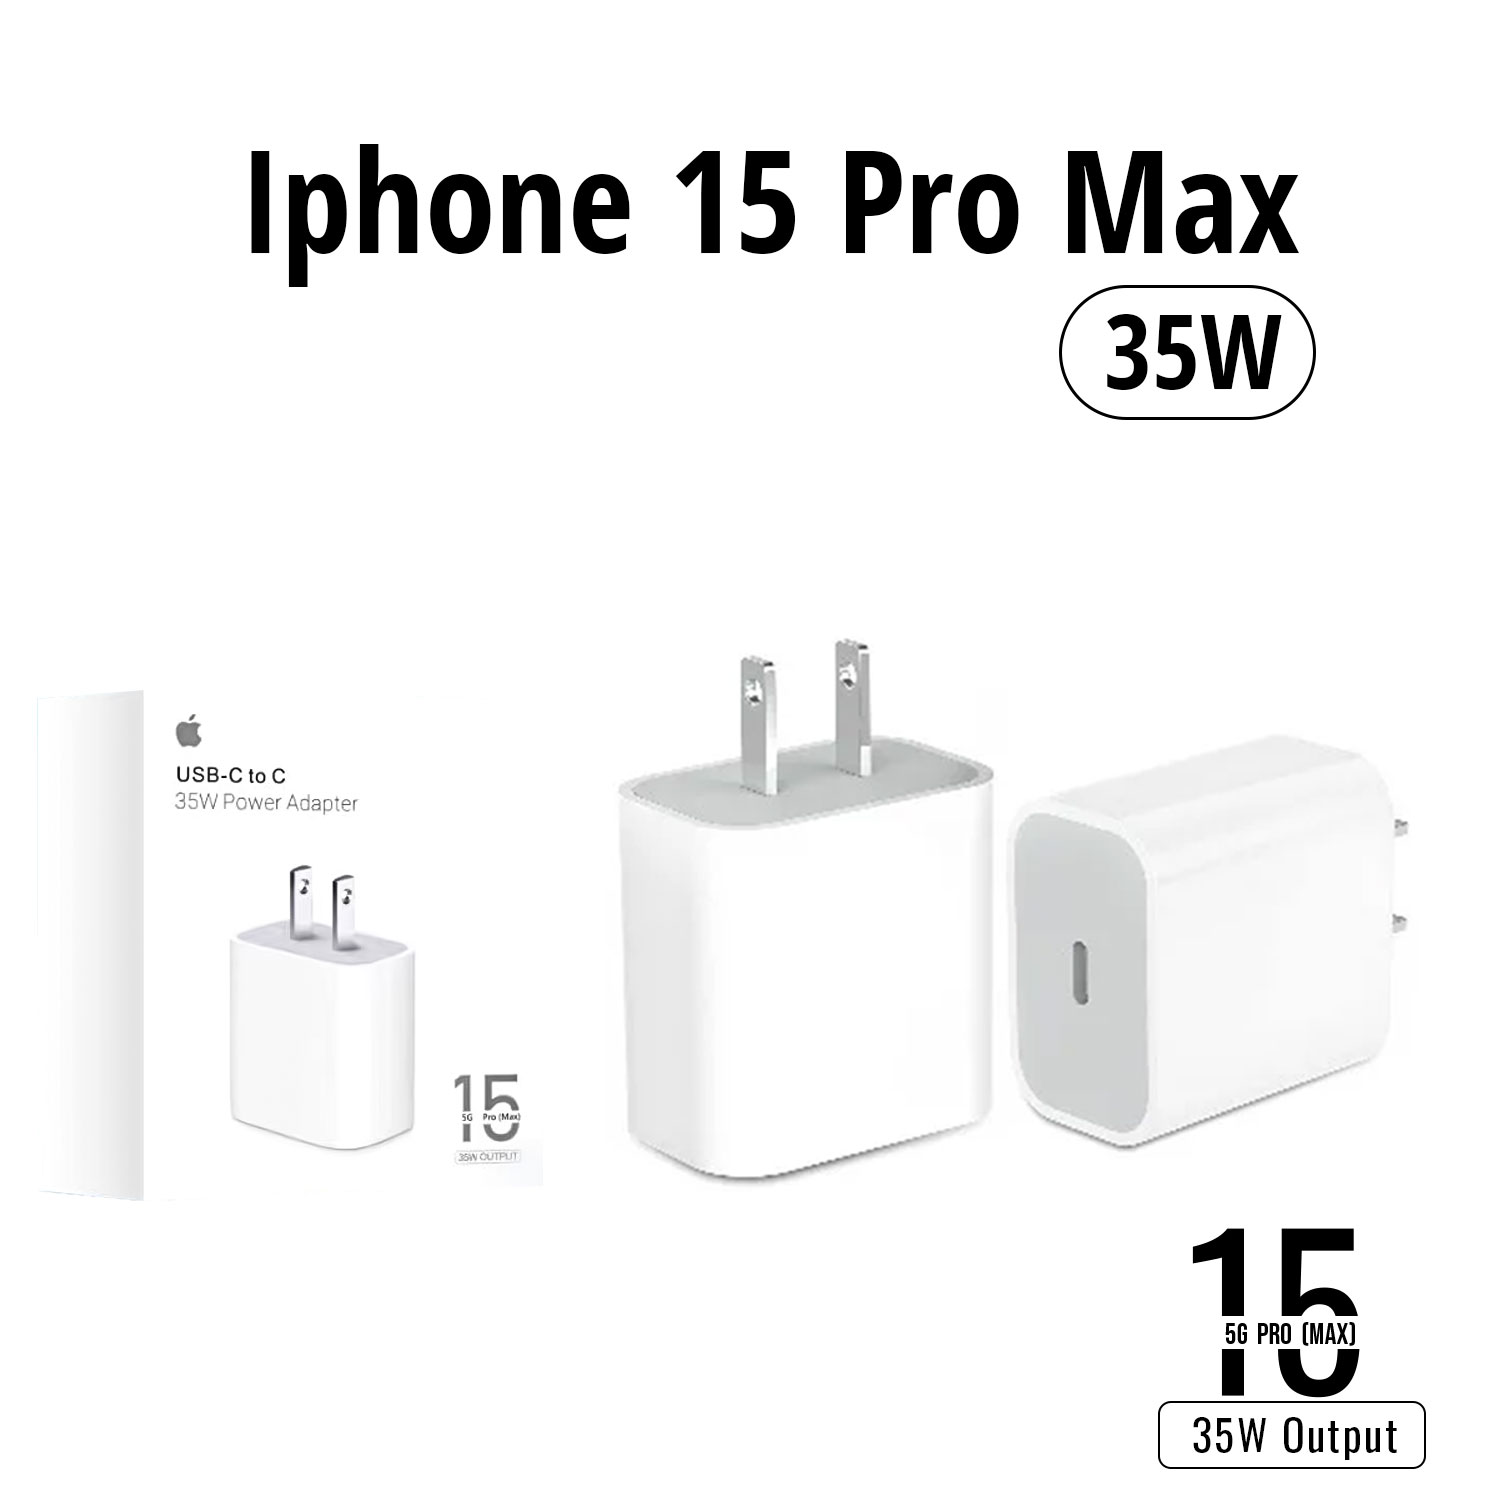 iphone_15_pro_max_2_pin_us_pin_35w_usb-c_power_adapter1705662271.jpg